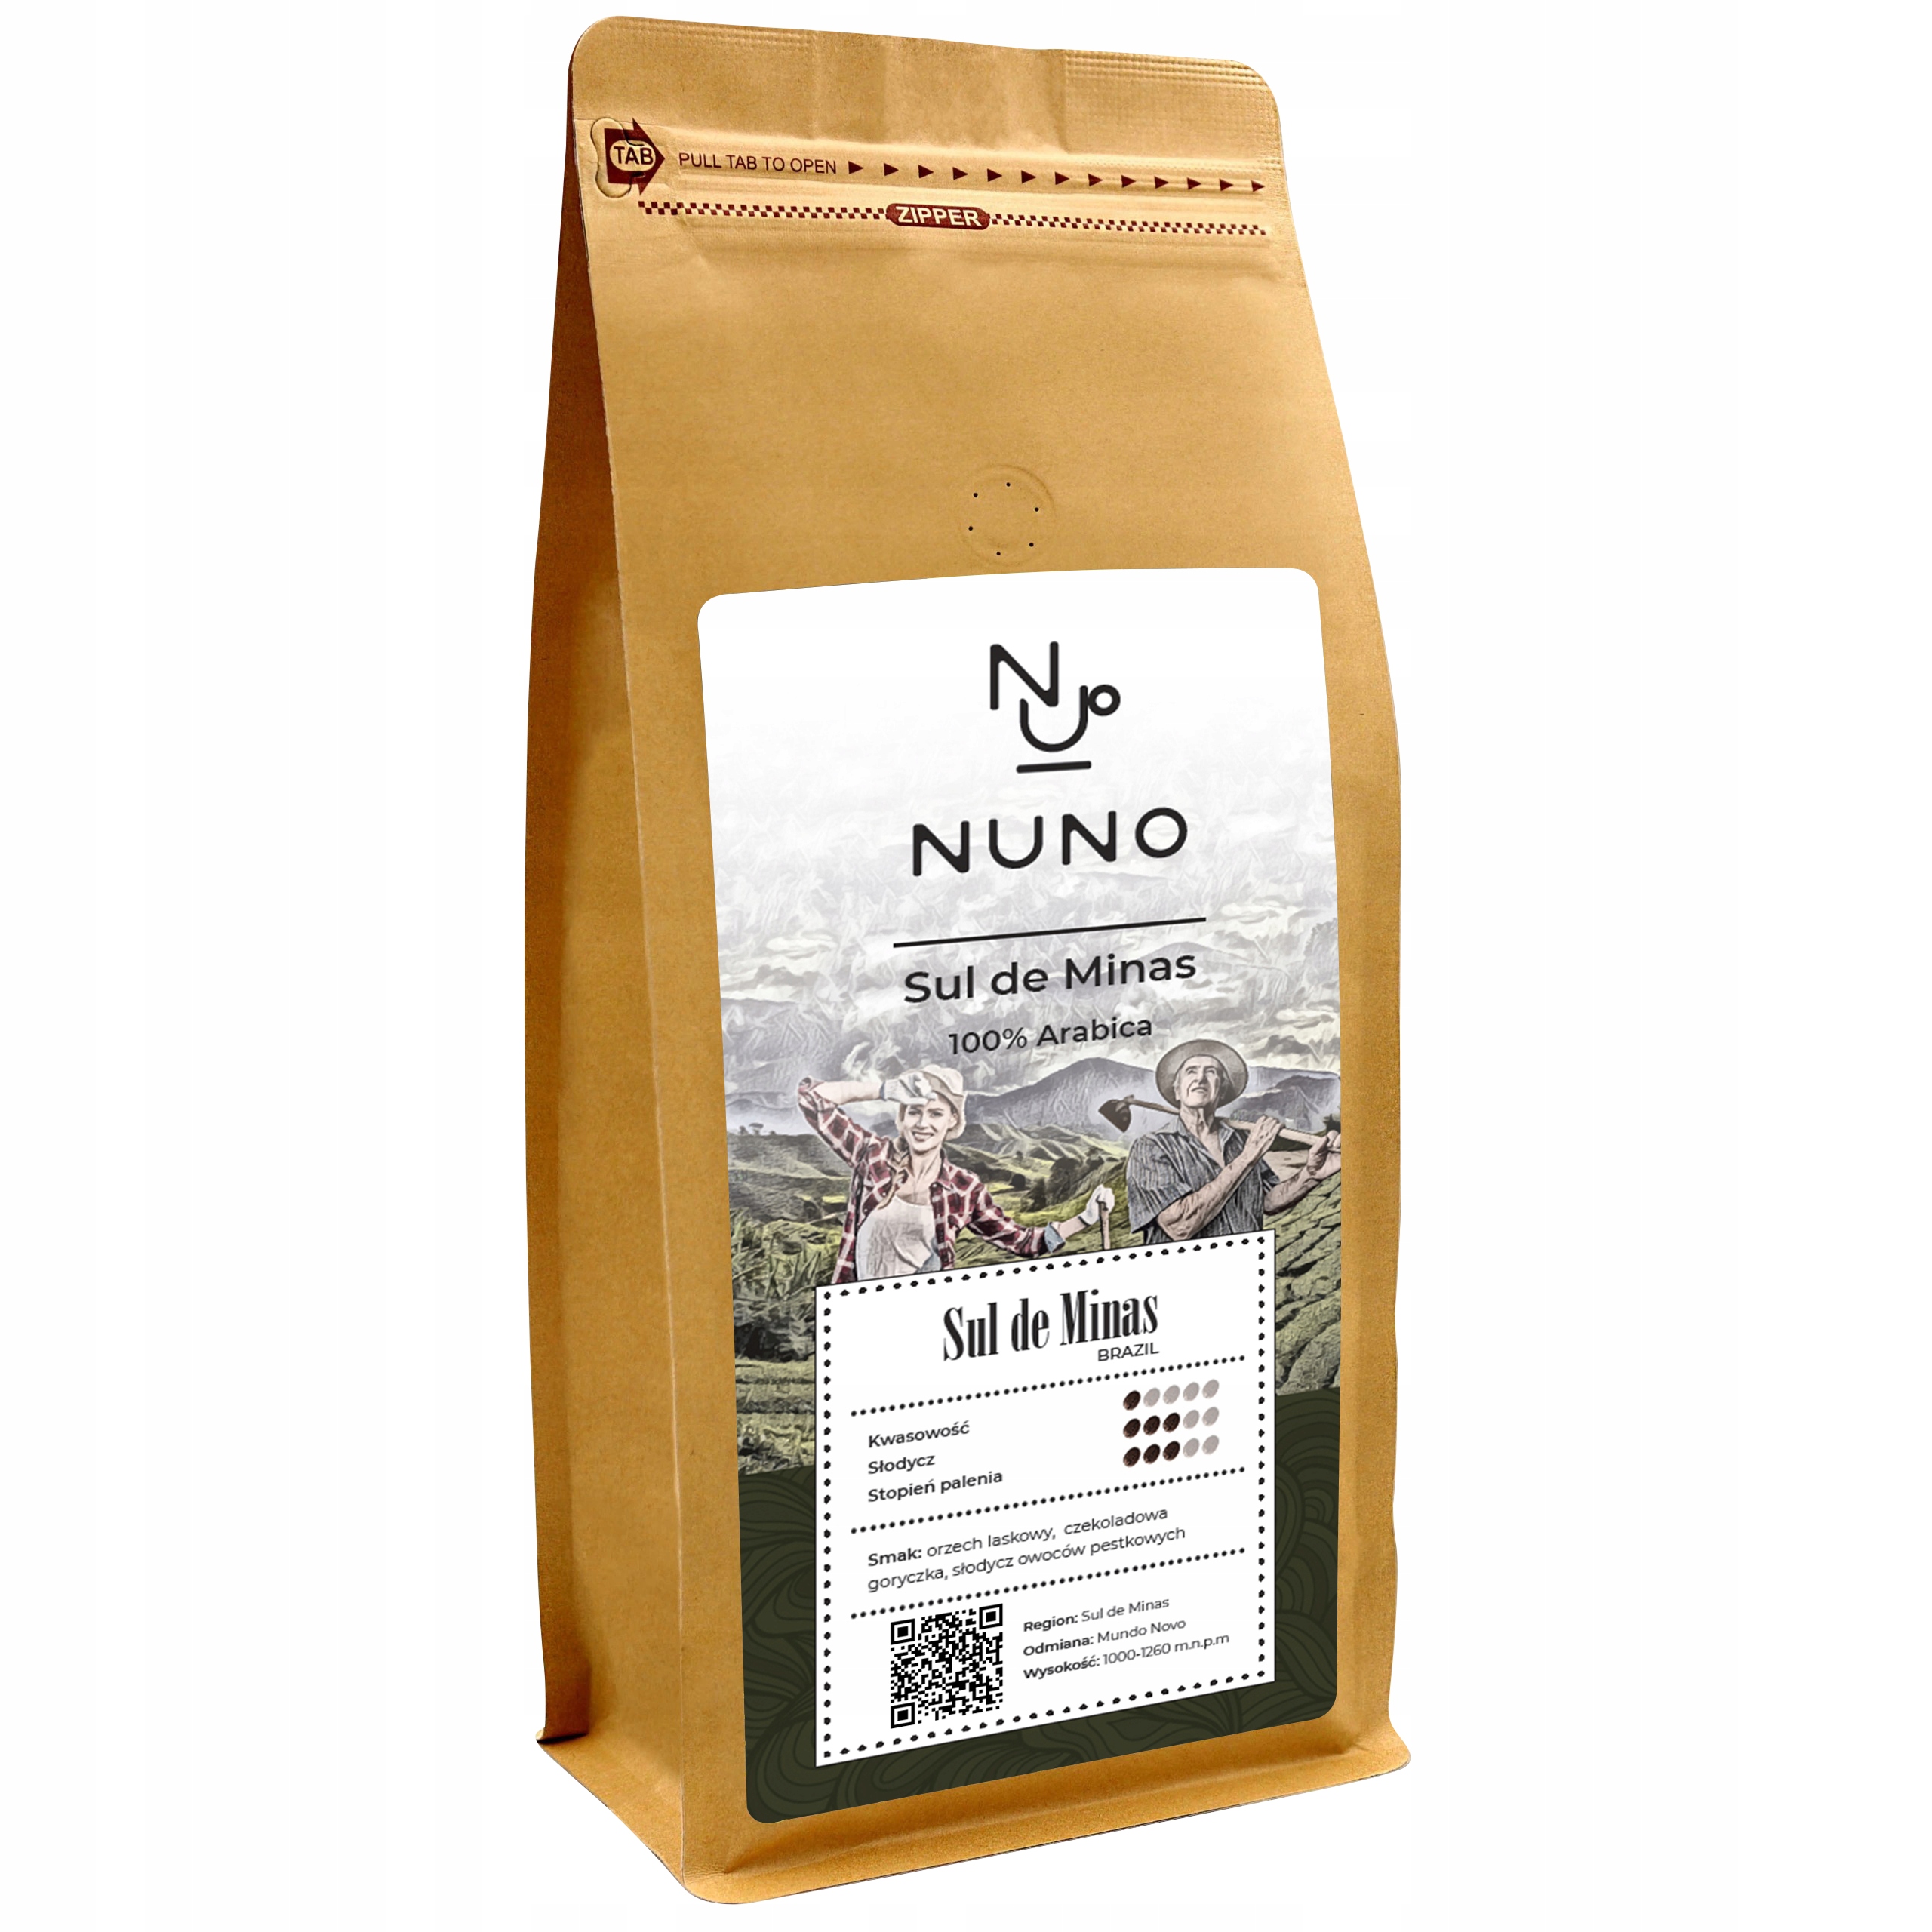 NUNO COFFEE BRAZIL SUL DE MINAS FRESH ARABIA 1KG EAN (GTIN) 5903990666827